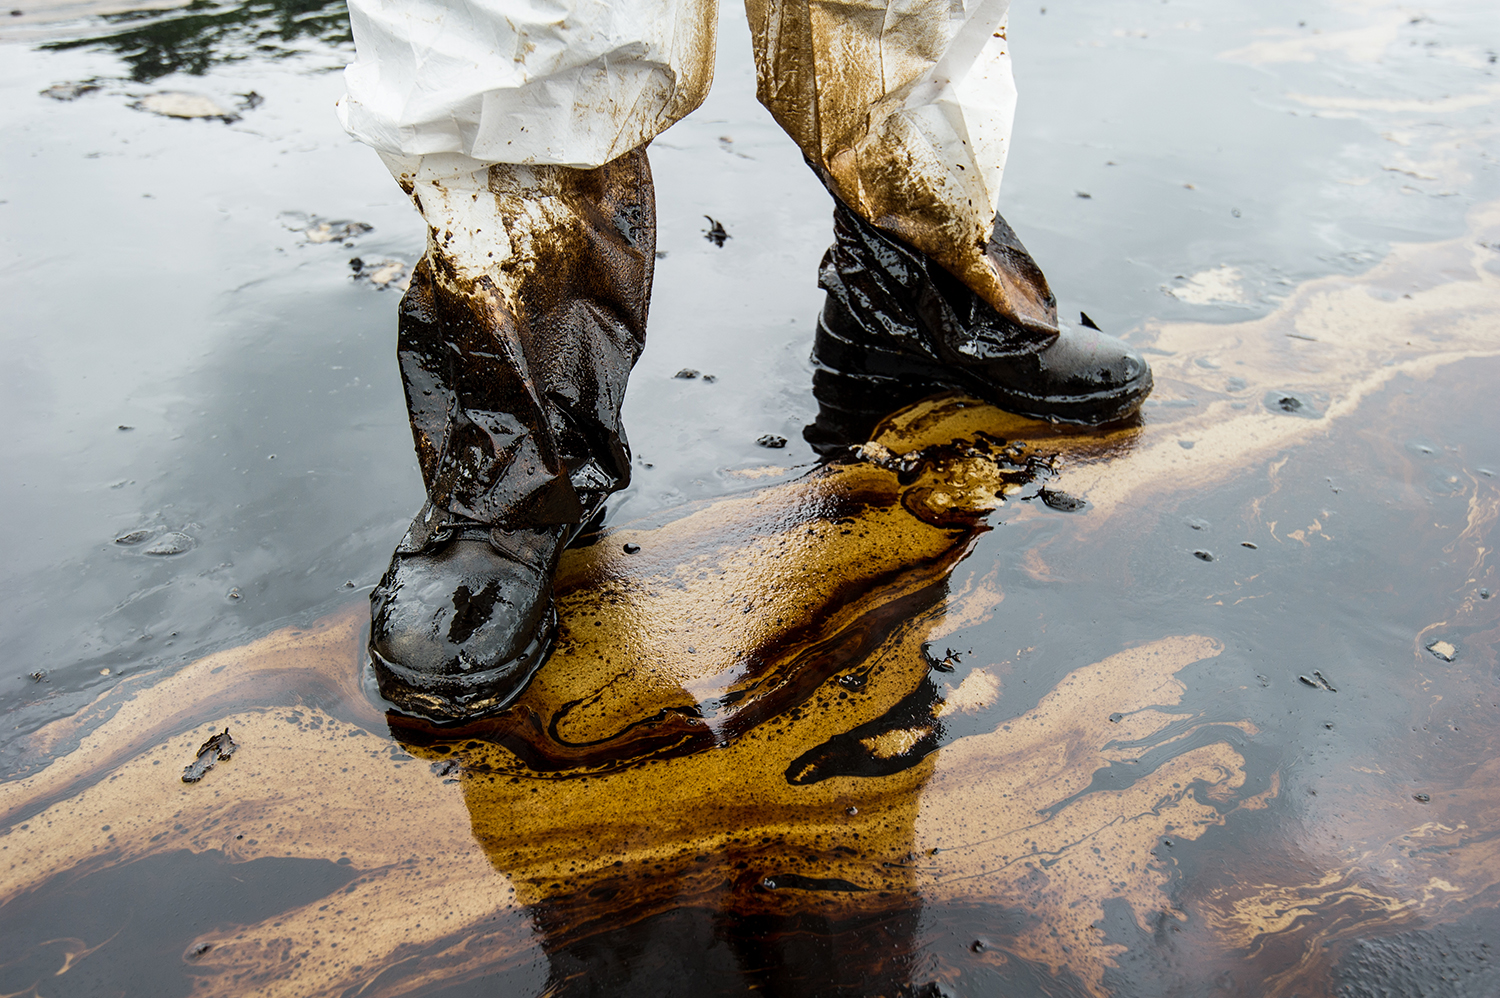 BP Oil Spill MDL background image